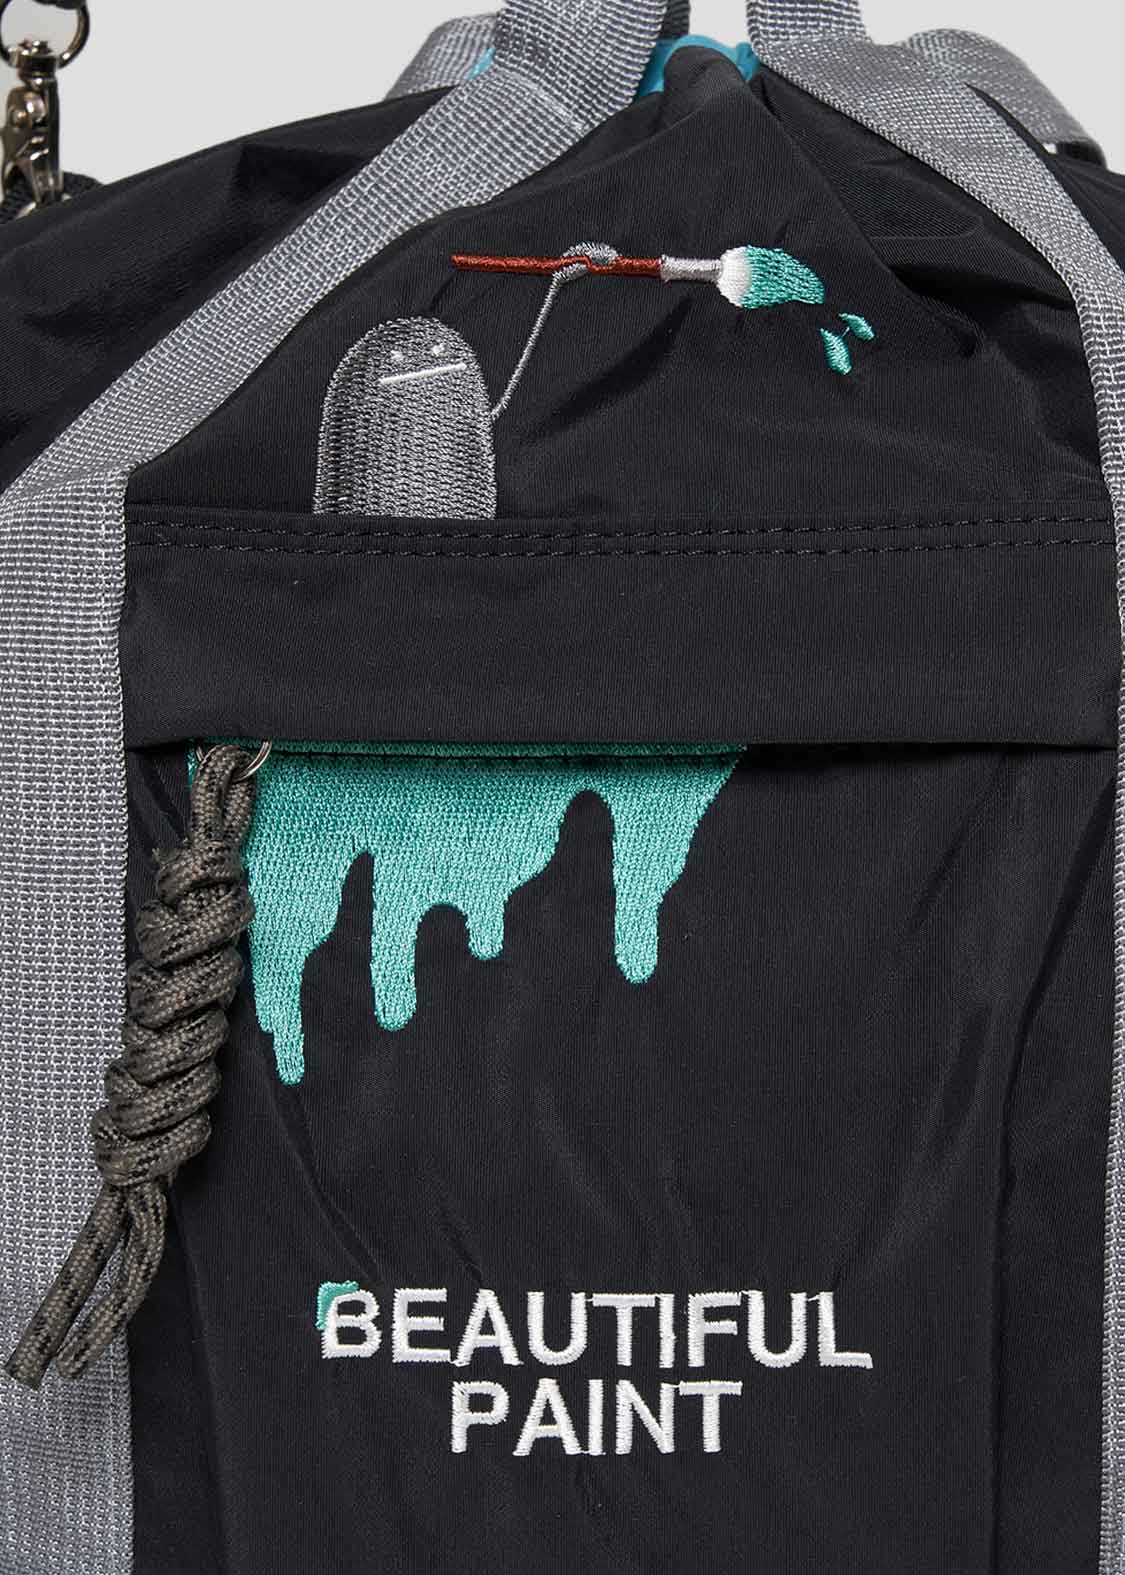 CTFK x graniph 3 WAY Square Tote Bag (Paint Beautiful Shadow)